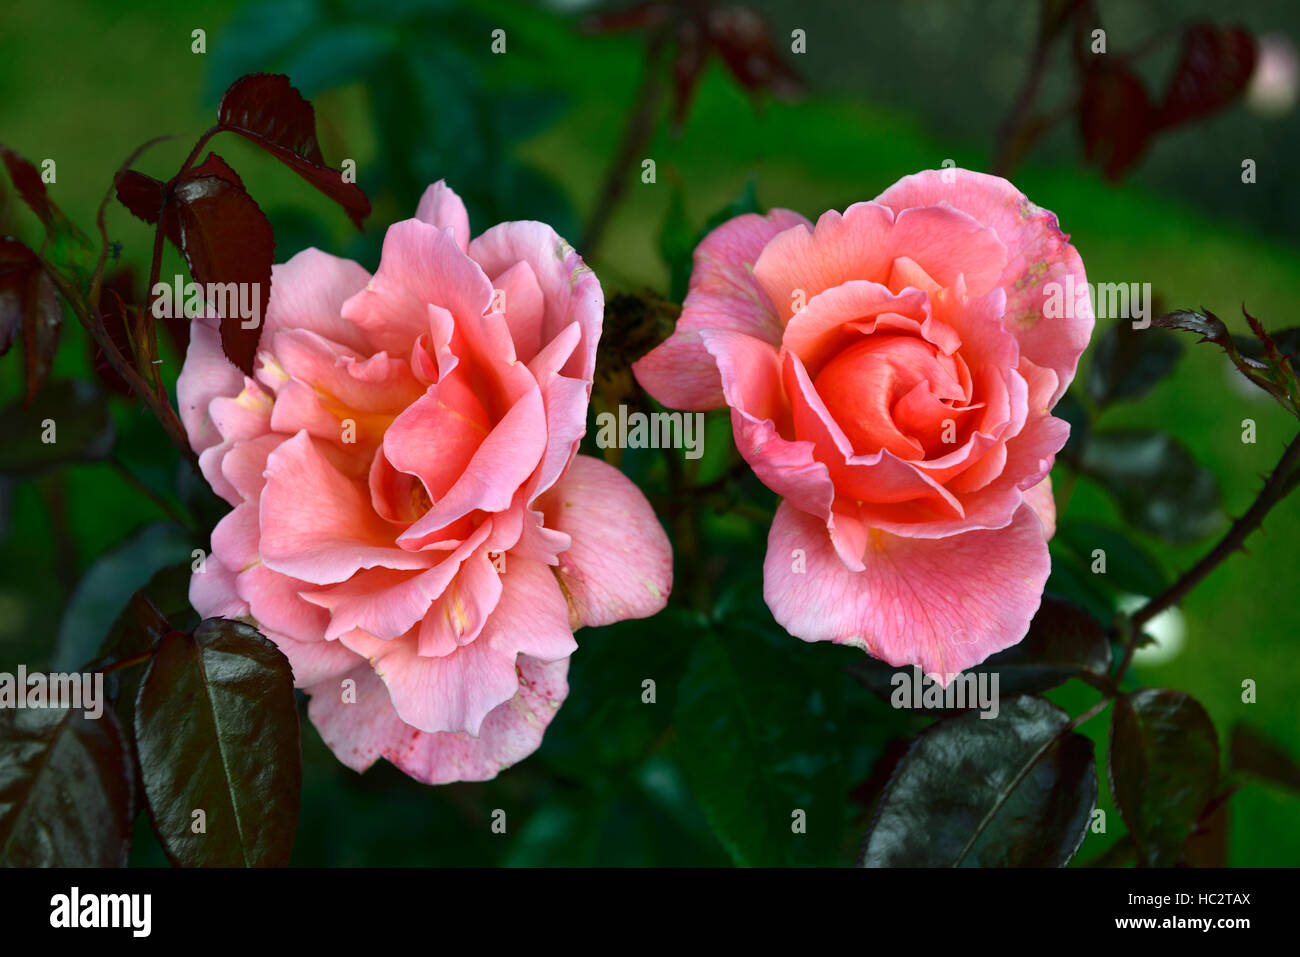 Rosa duftende Freude stieg Rosen Edelrosen orange Aprikose blühende Blumen duftenden duftenden Strauch Sträucher RM Stockfoto